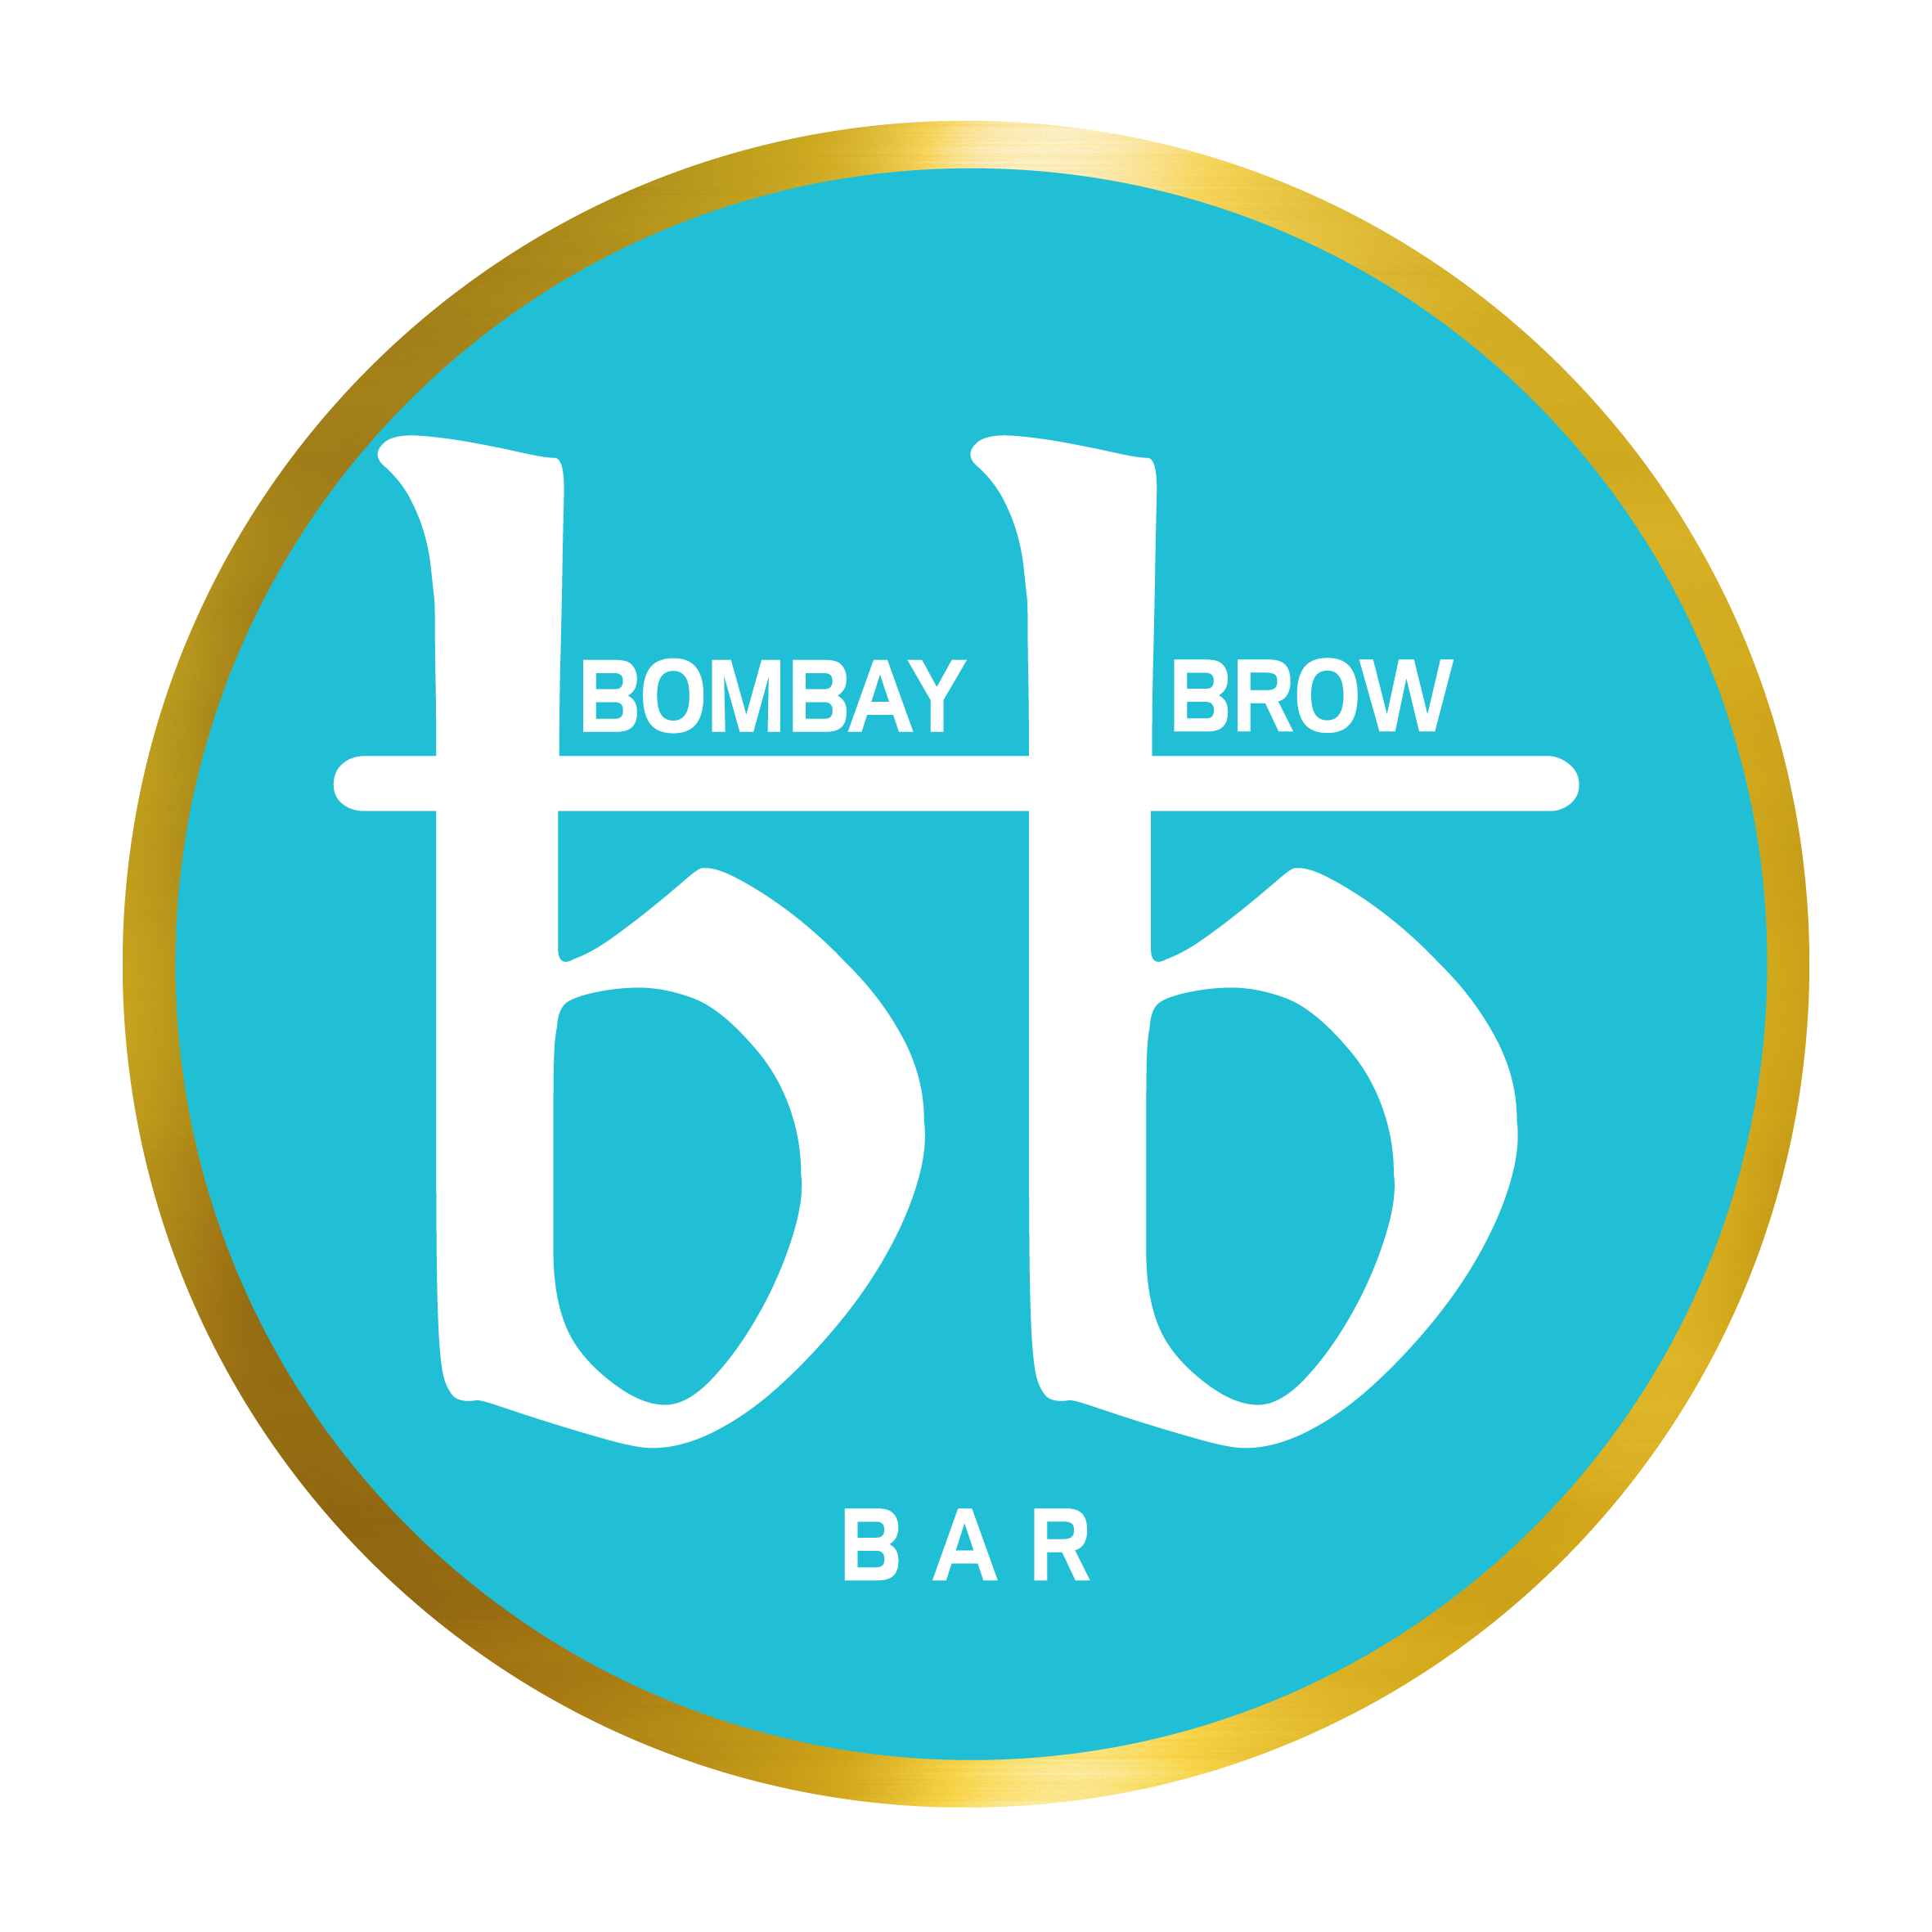 THE BOMBAY BROW BAR